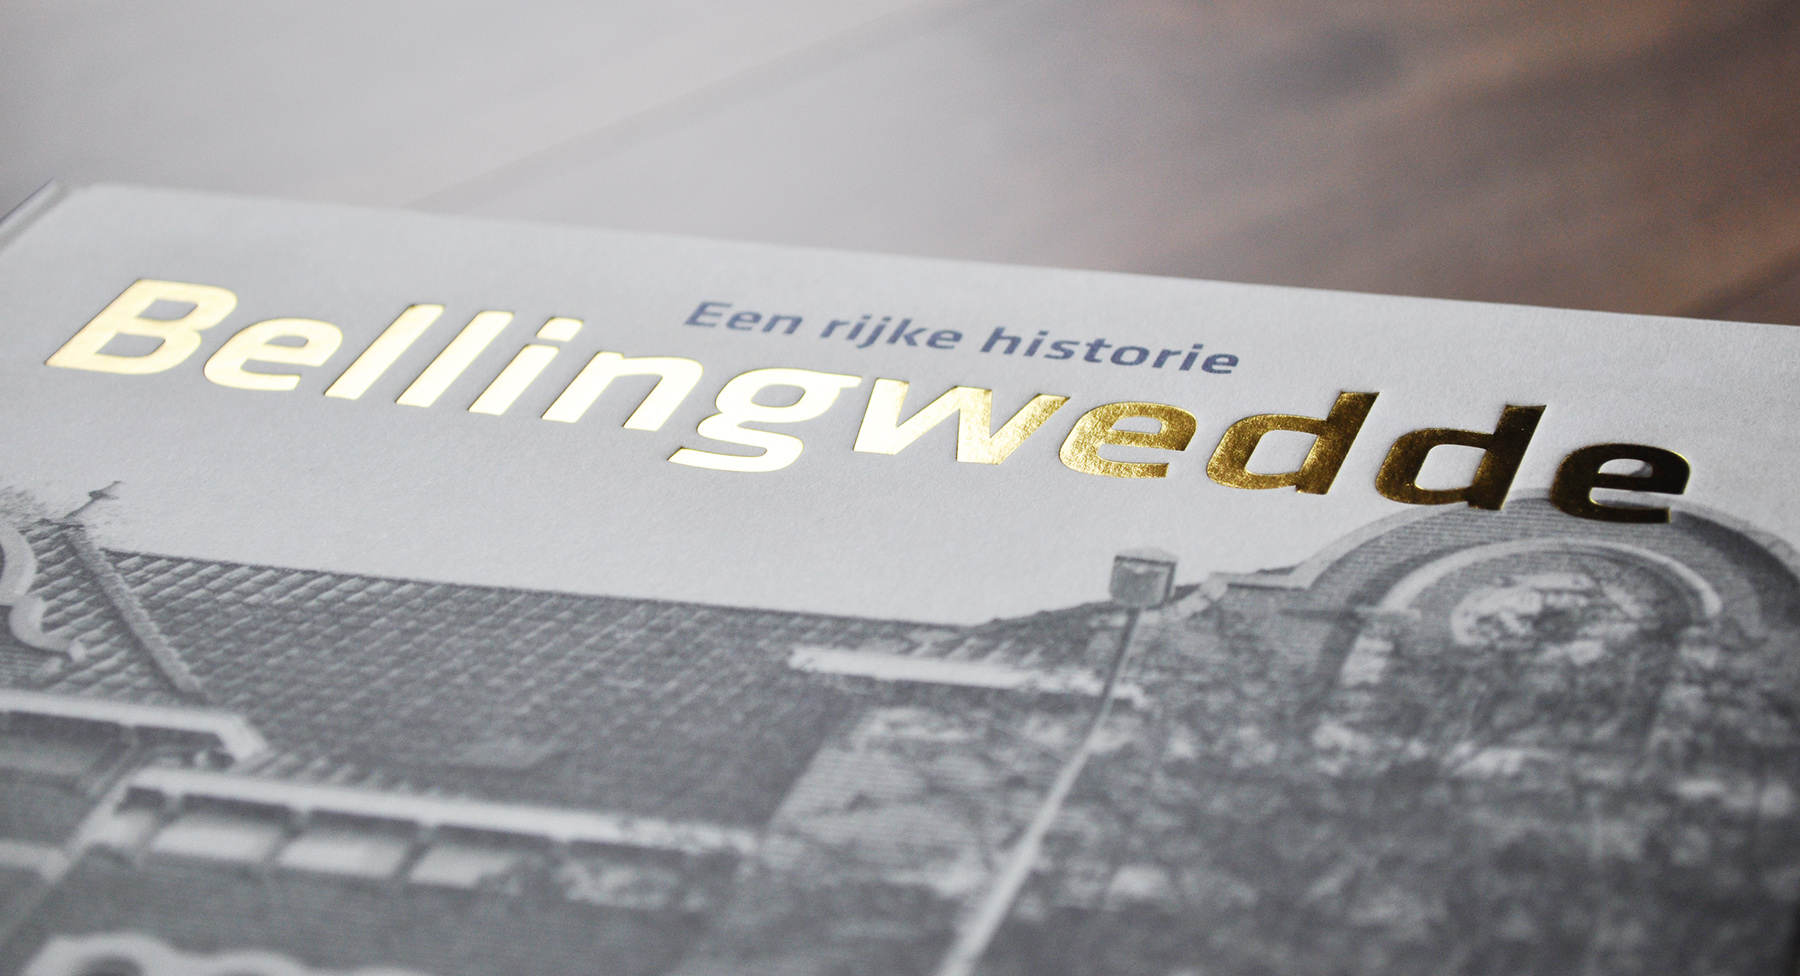 Details omslag ontwerp en opmaak boek Bellingwedde door JantyDesign